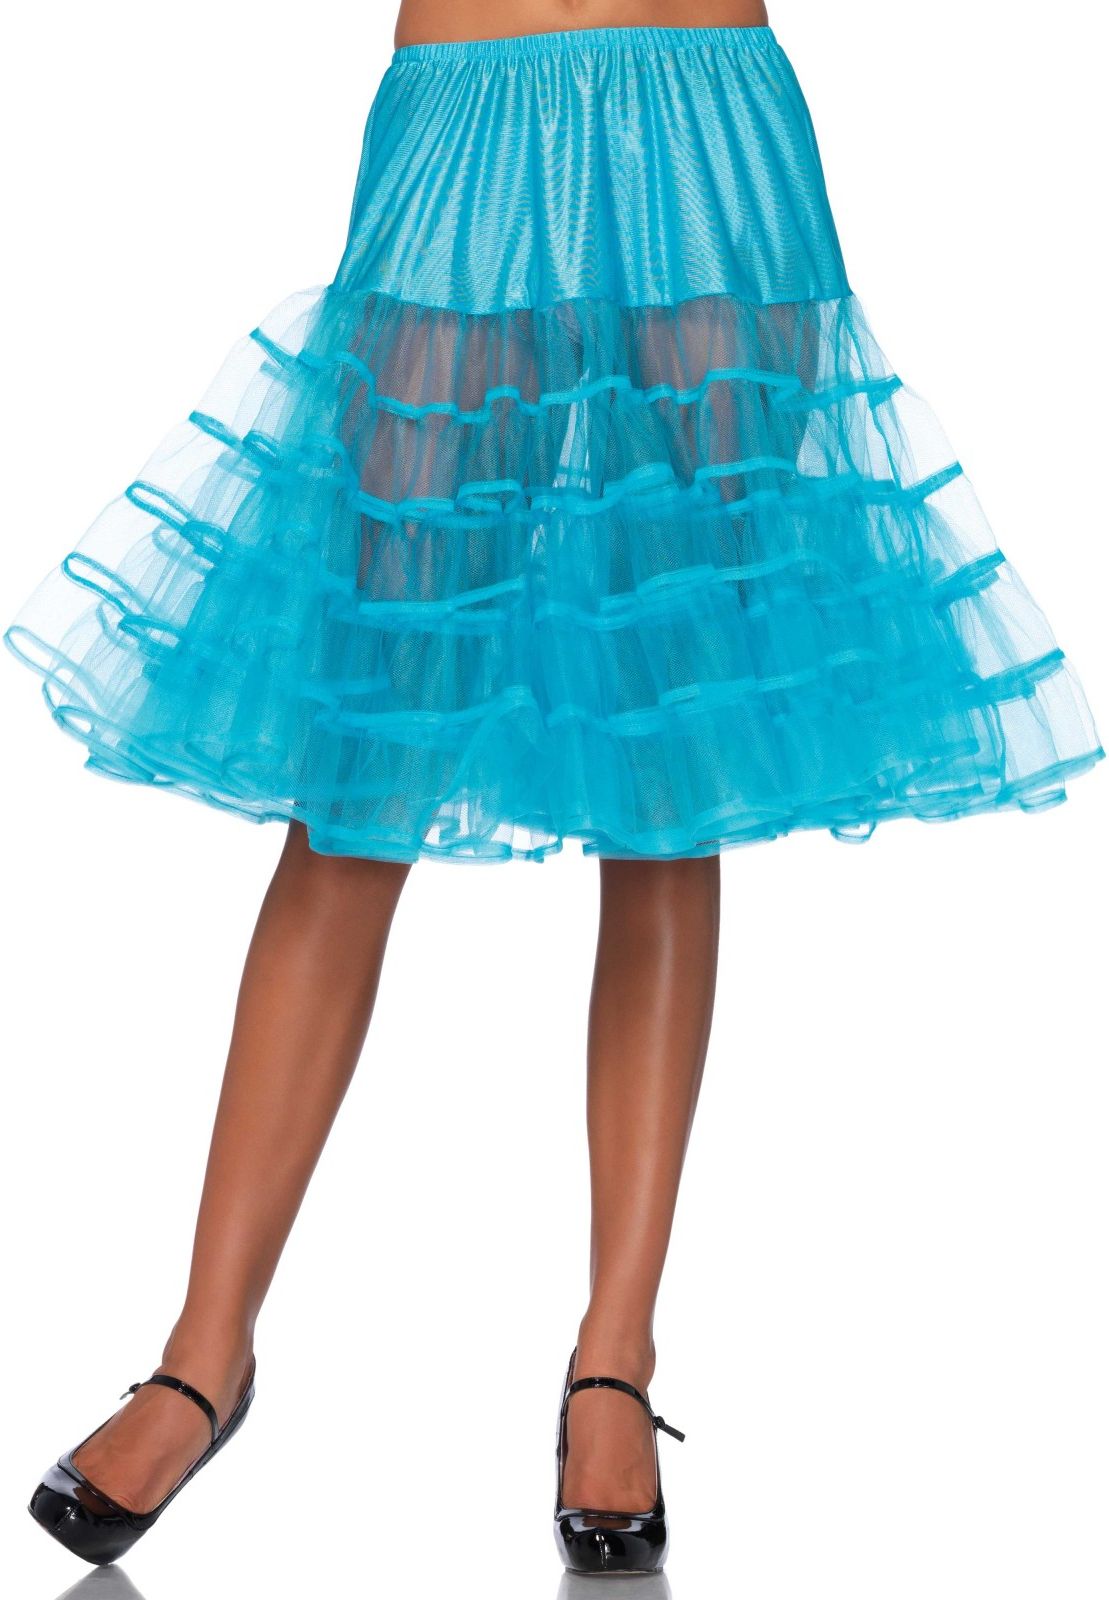 Turquoise luxe petticoat